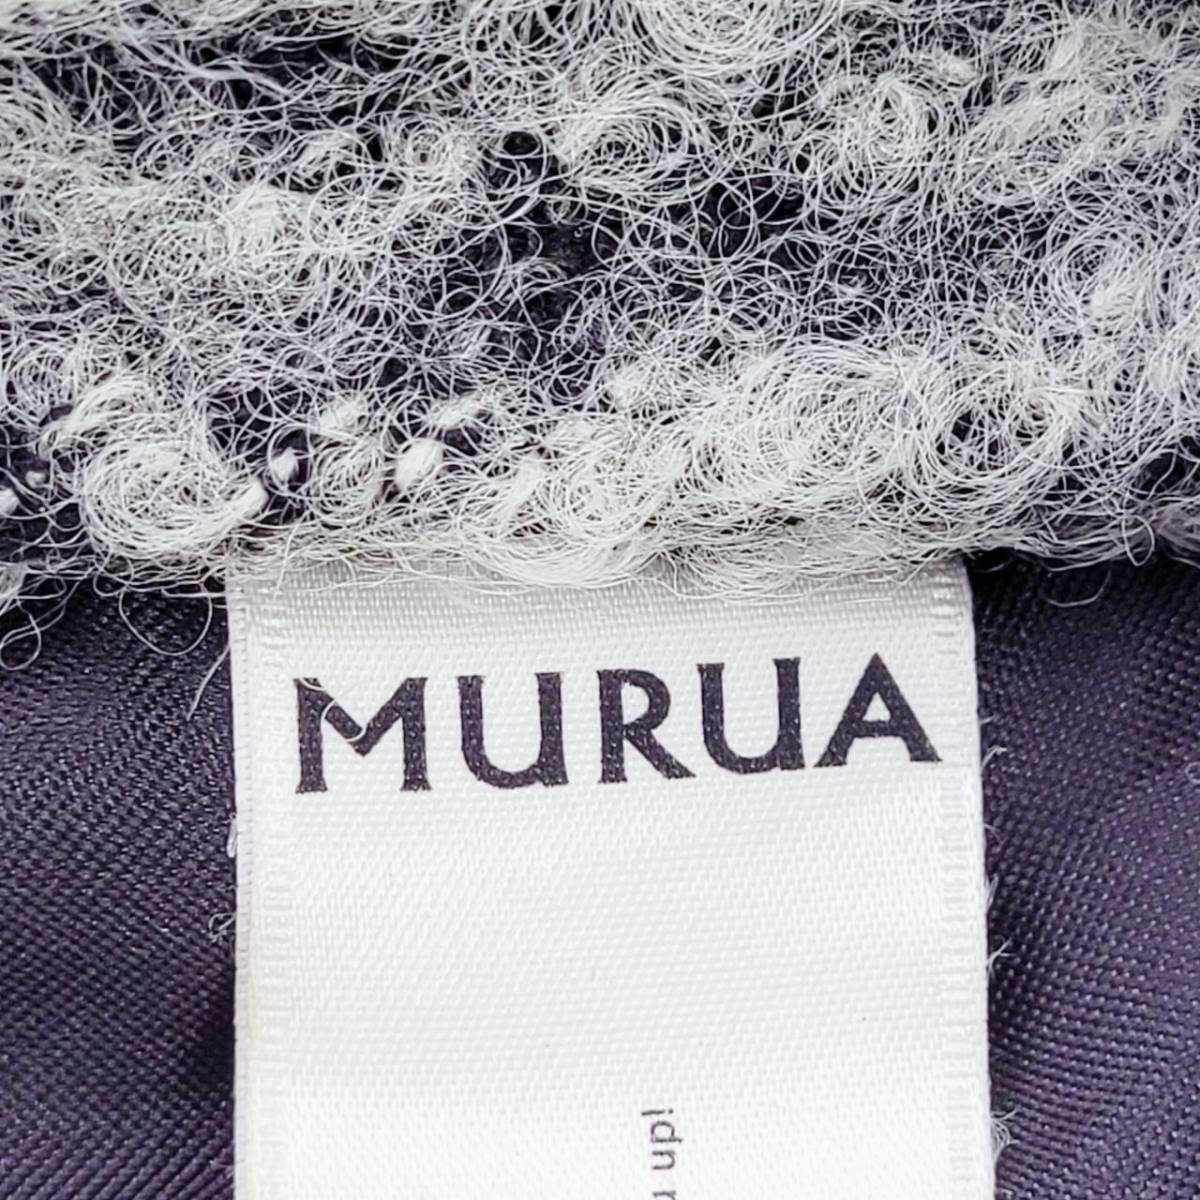 【20159】MURUA ムルーア ジャケット 99(F) 黒 ブラック グレー カジュアル シンプル ファスナー 柄模様 防寒